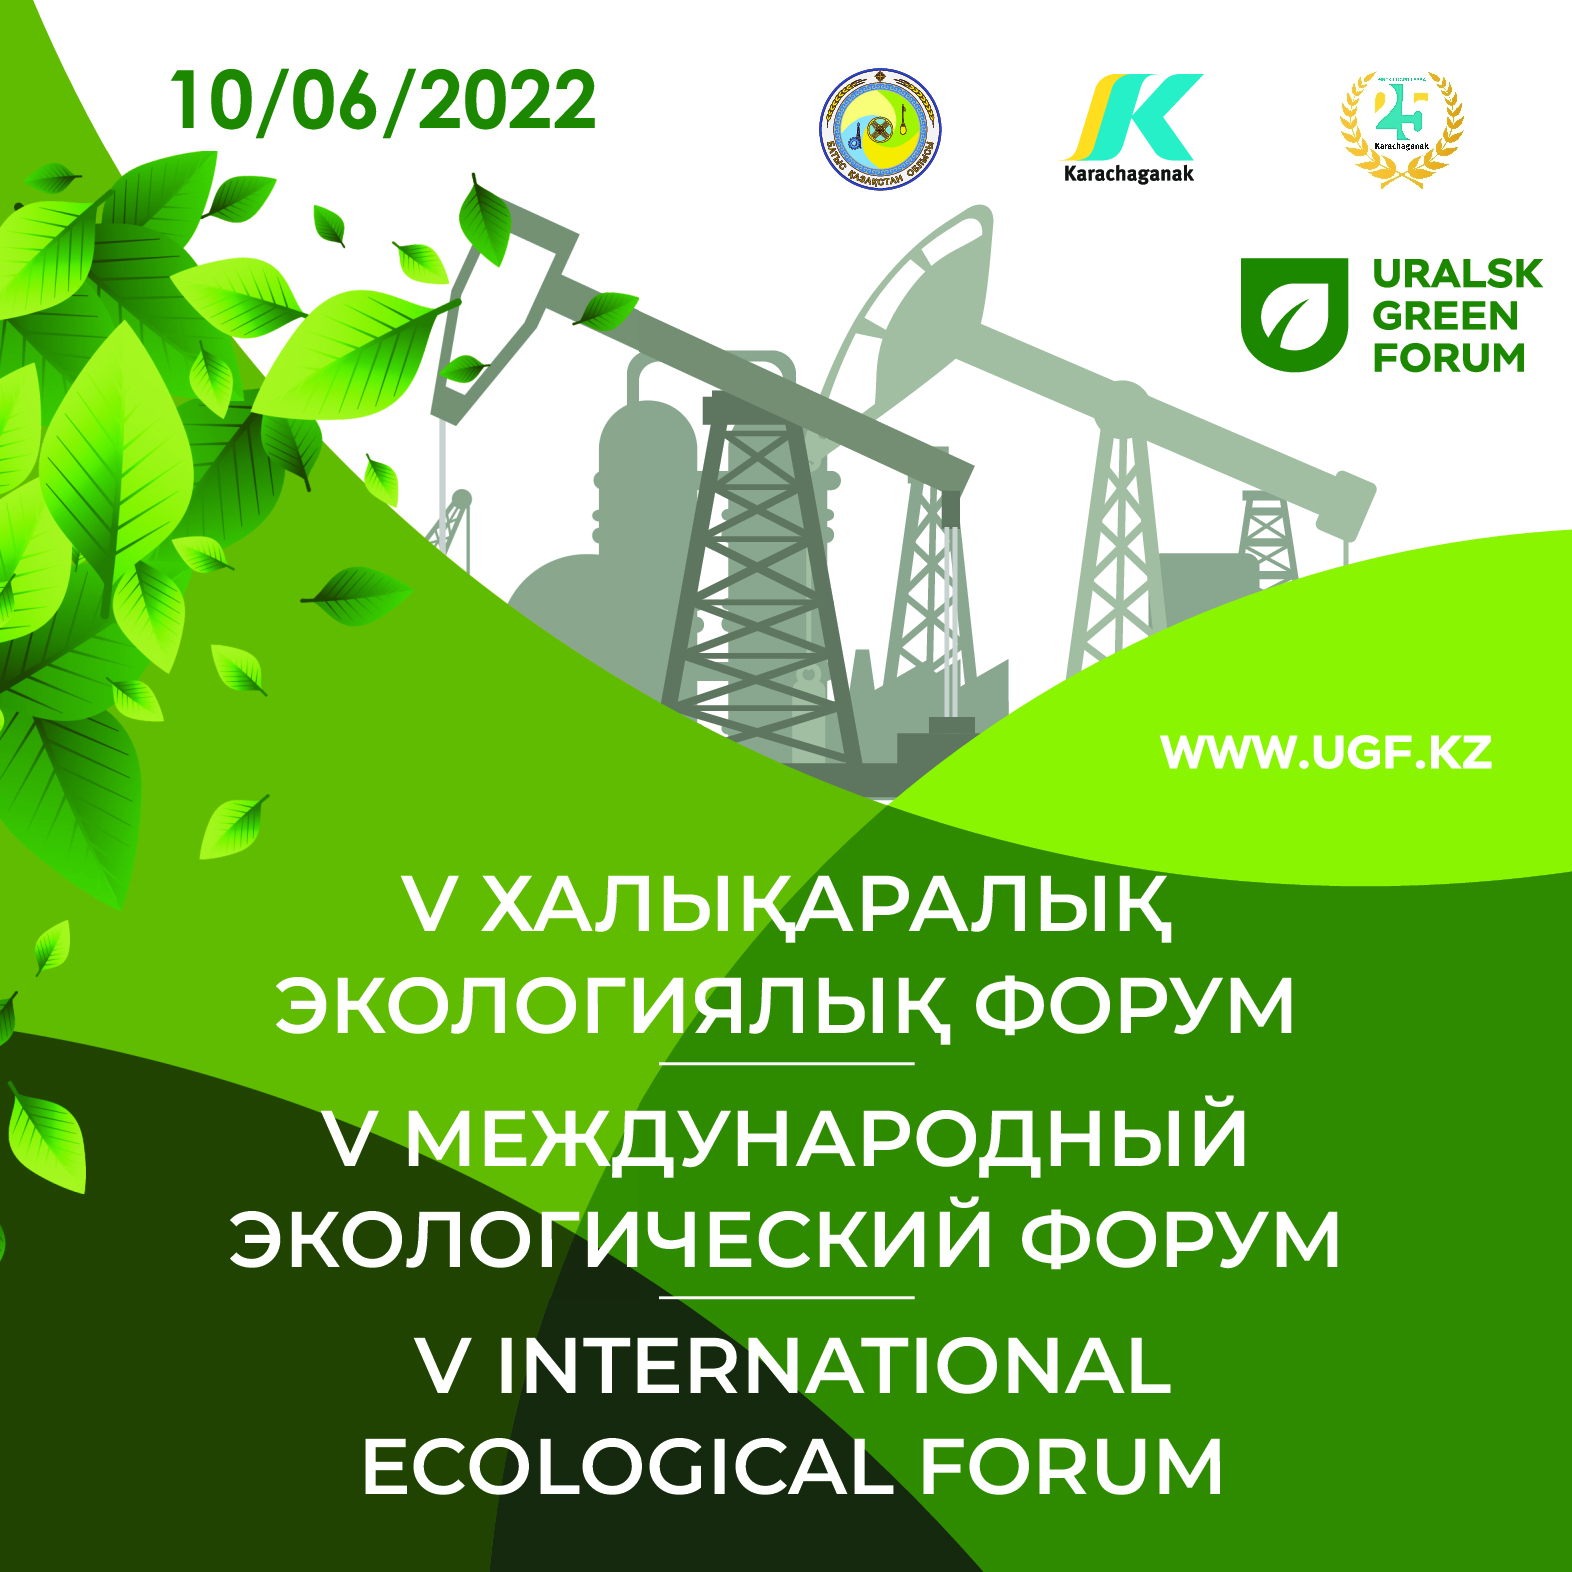 V Uralsk Green Forum will be held in Uralsk